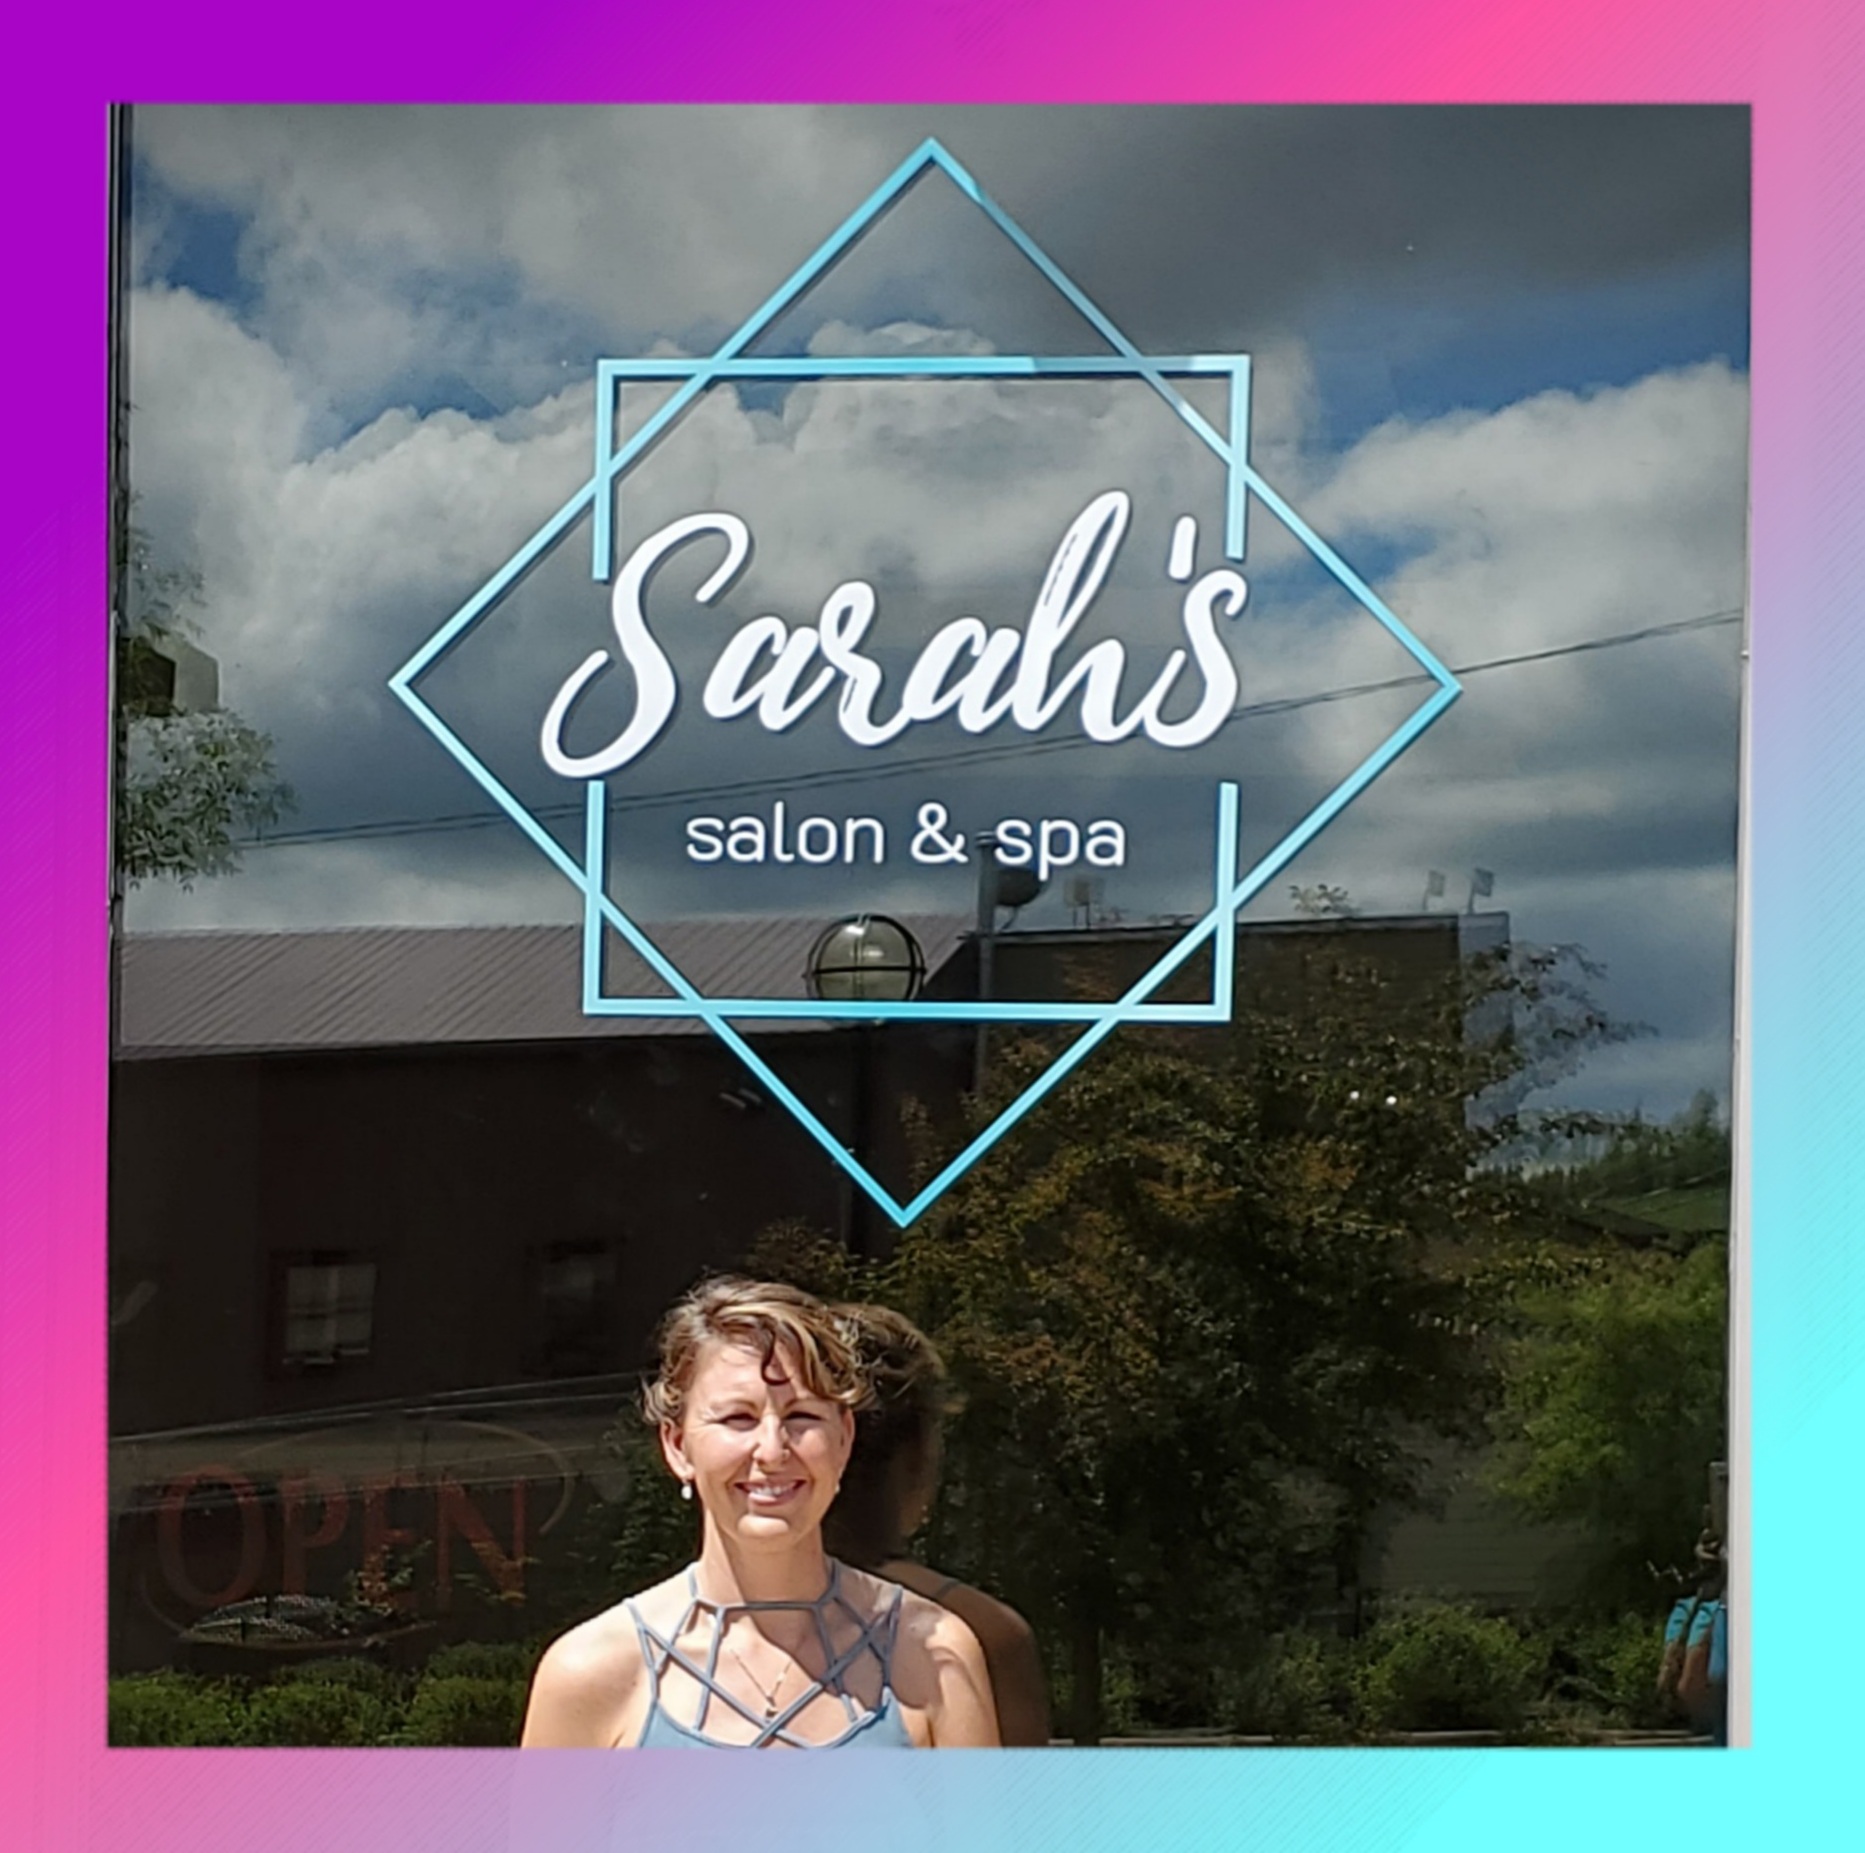 Sarah's Salon & Spa 409 Pierce St, Eveleth Minnesota 55734